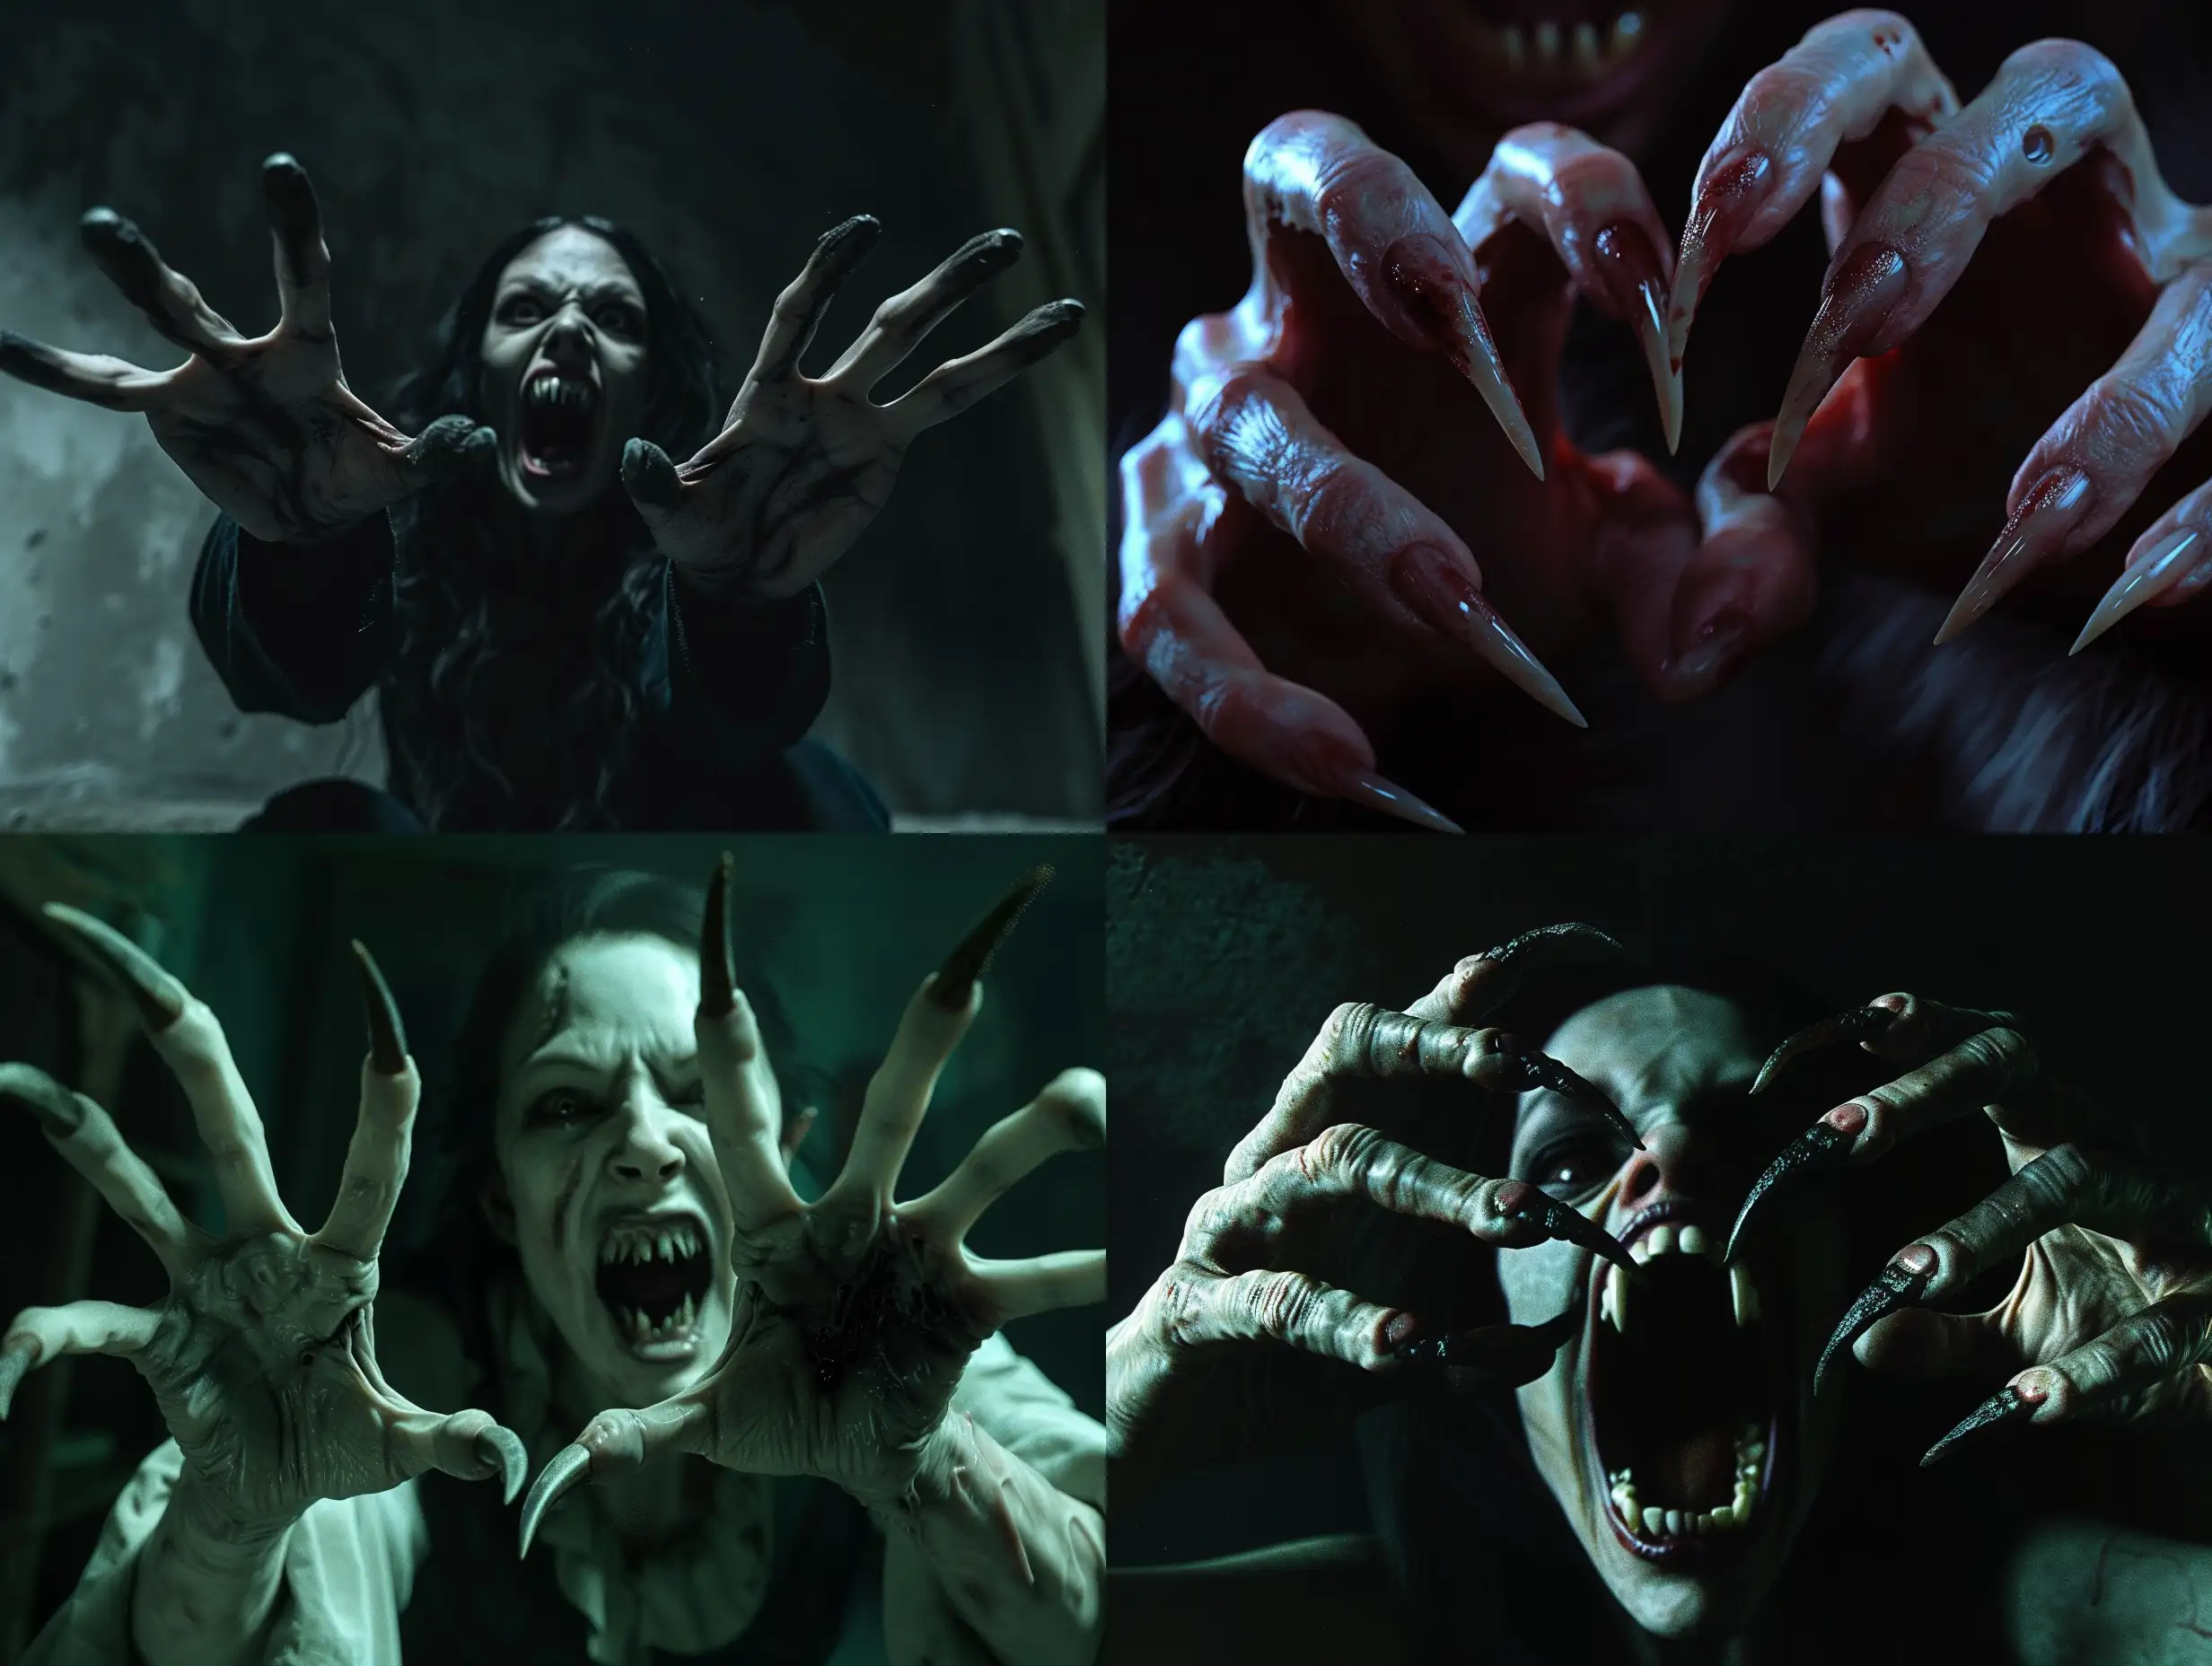 Monstrous-Vampire-Woman-with-Long-Fingernails-in-Dark-Room